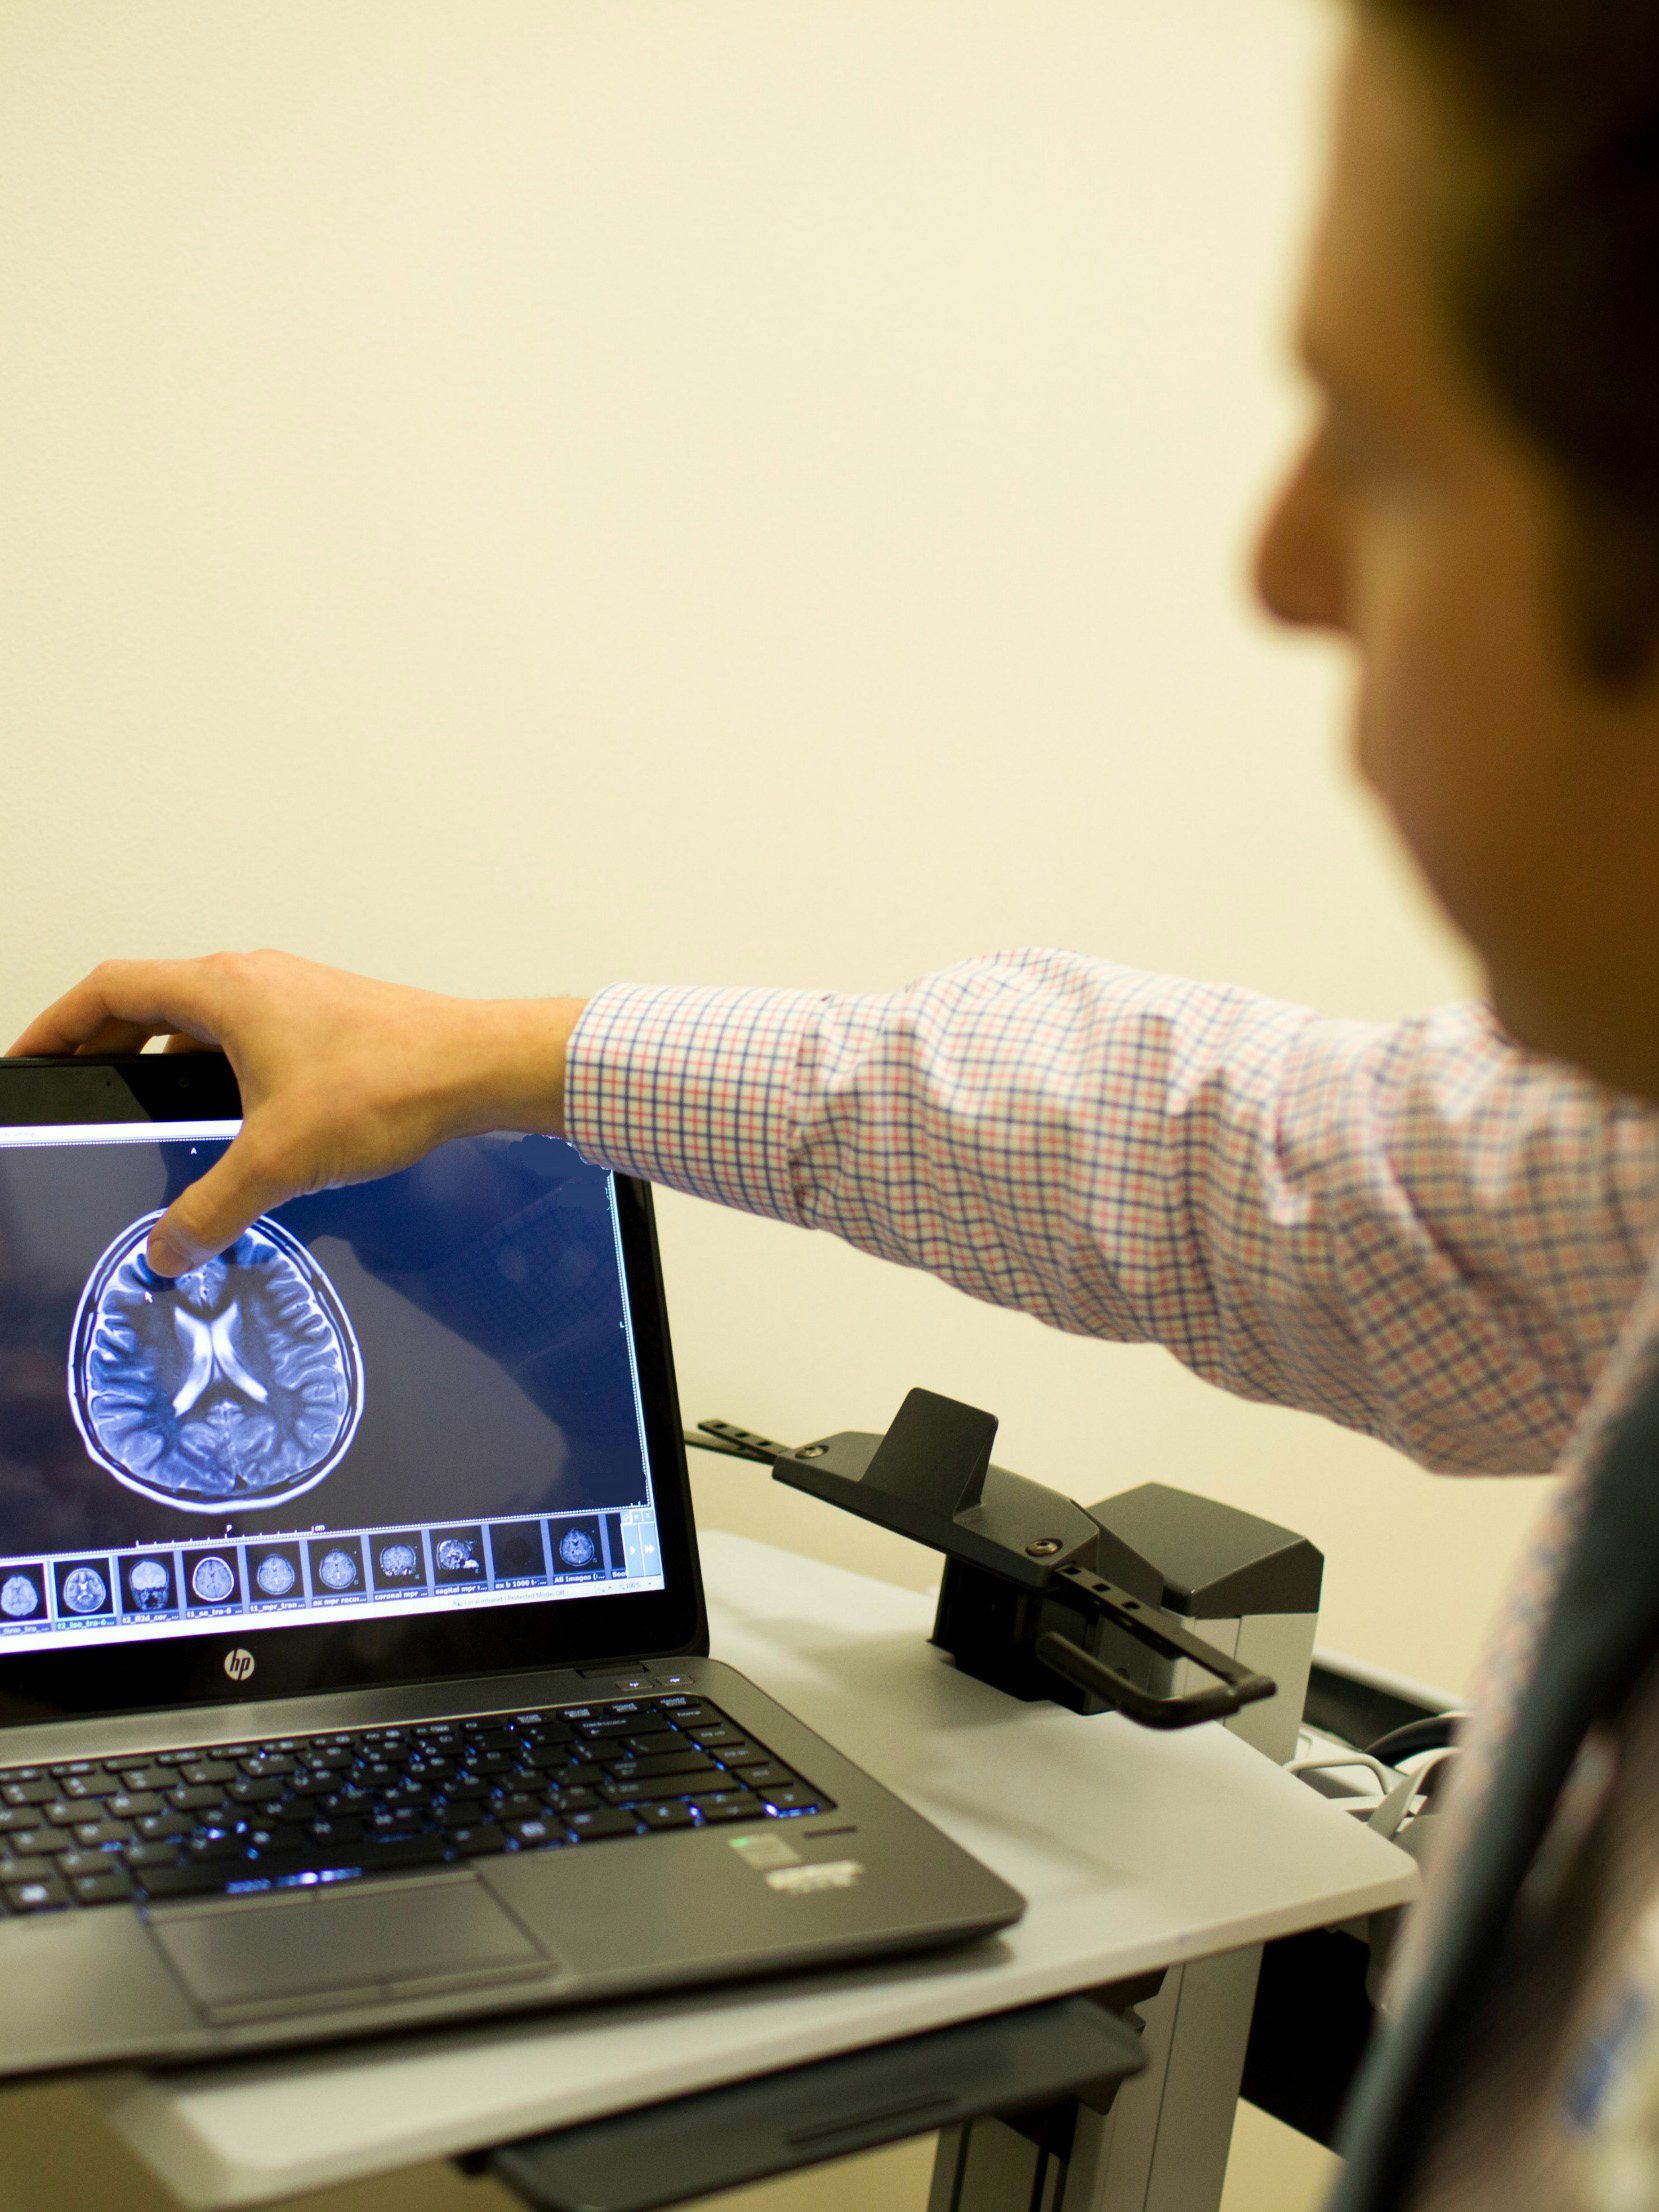 CHOC neurologist Dr. Sharief Taraman looking at brain imaging on laptop